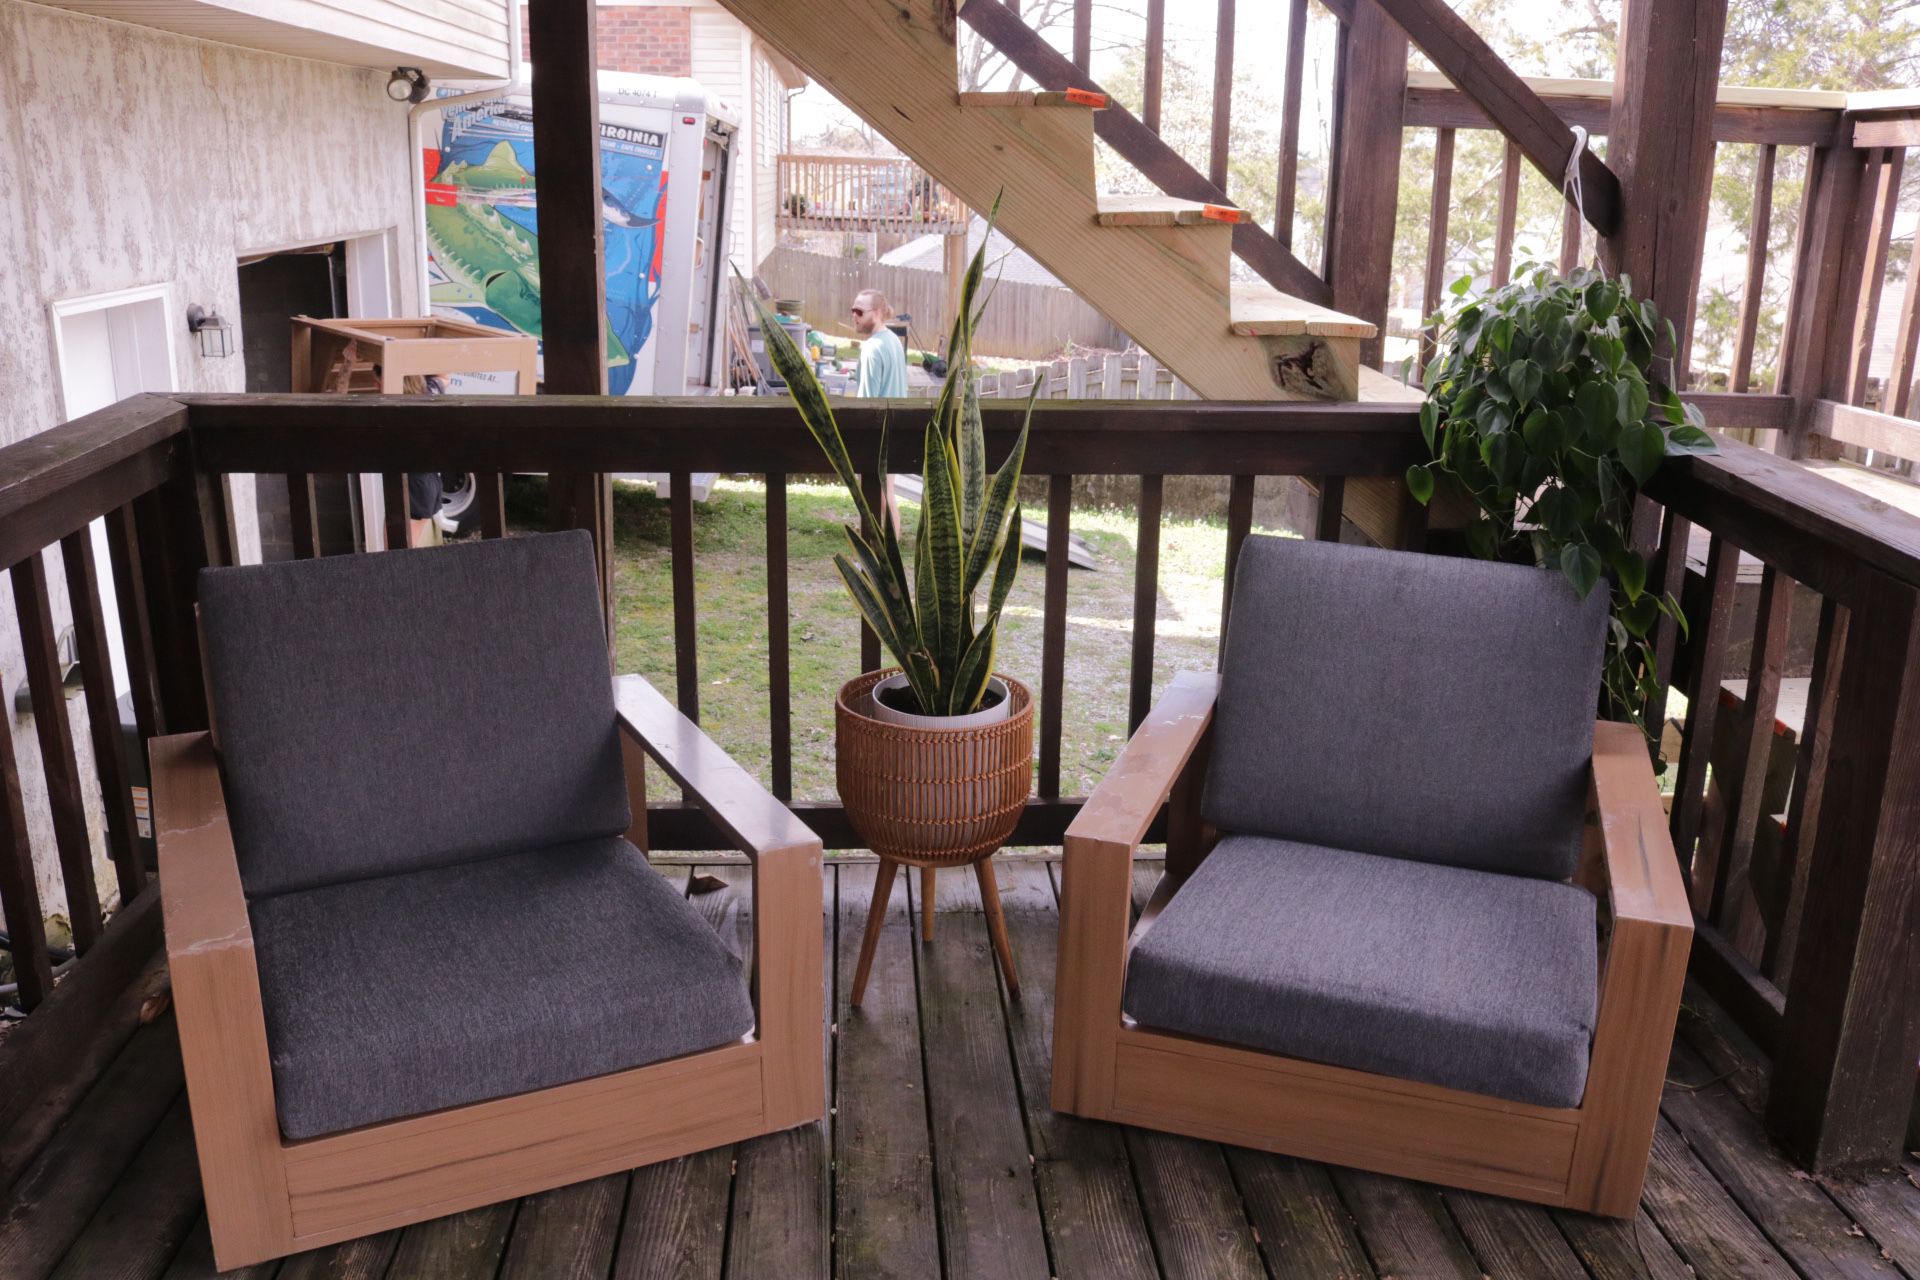 West Elm Outdoor Chair Set